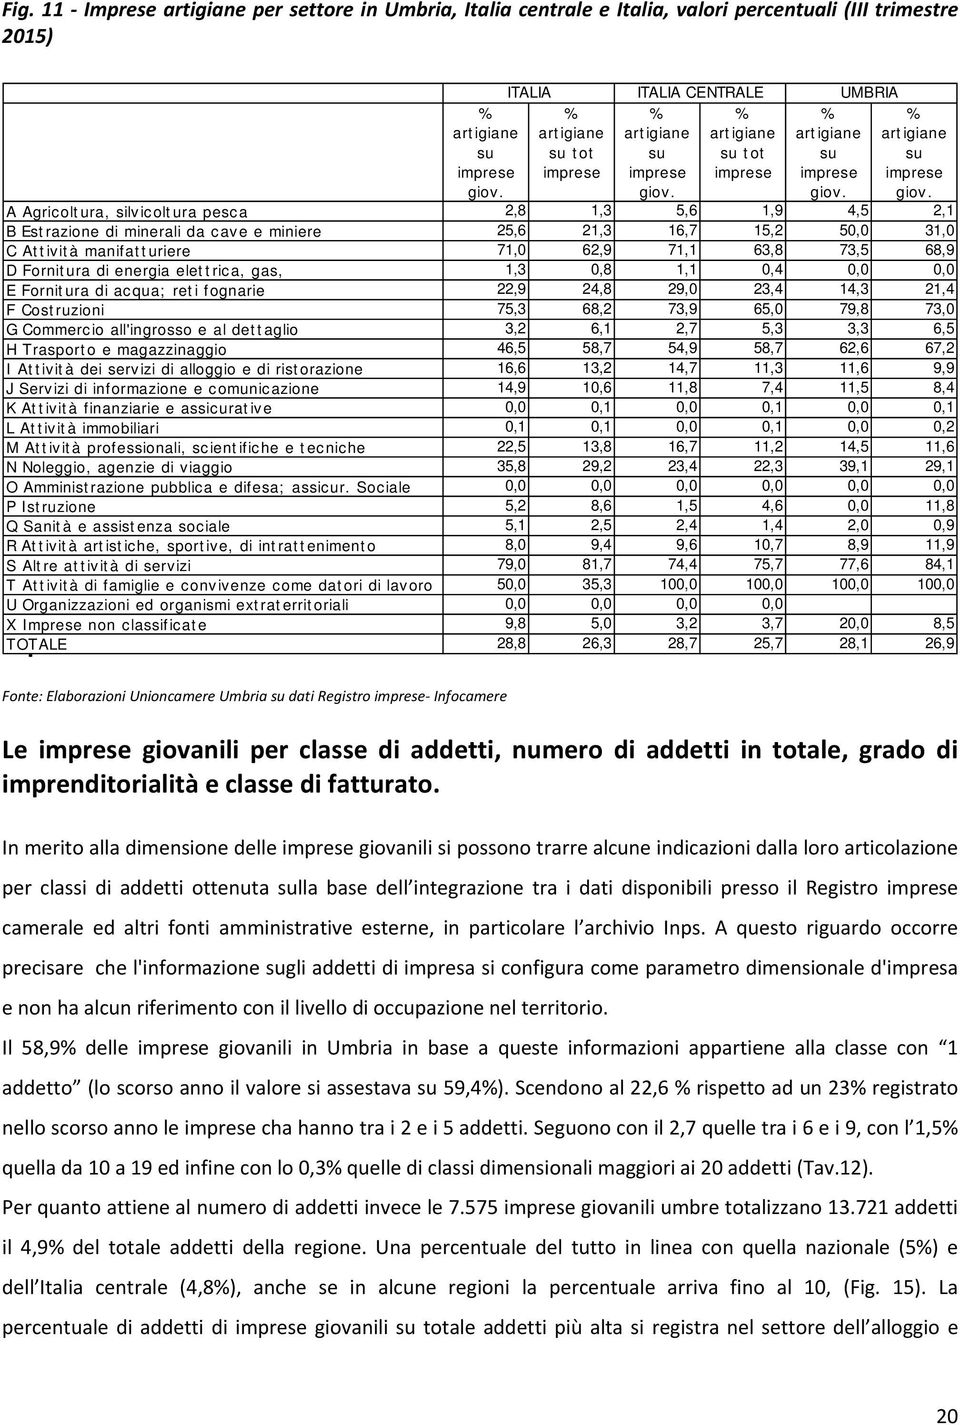 8,5 capitale TOTALE 28,8 26,3 28,7 25,7 28,1 26,9 ITALIA ITALIA CENTRALE UMBRIA % artigiane su tot imprese % artigiane su imprese giov.